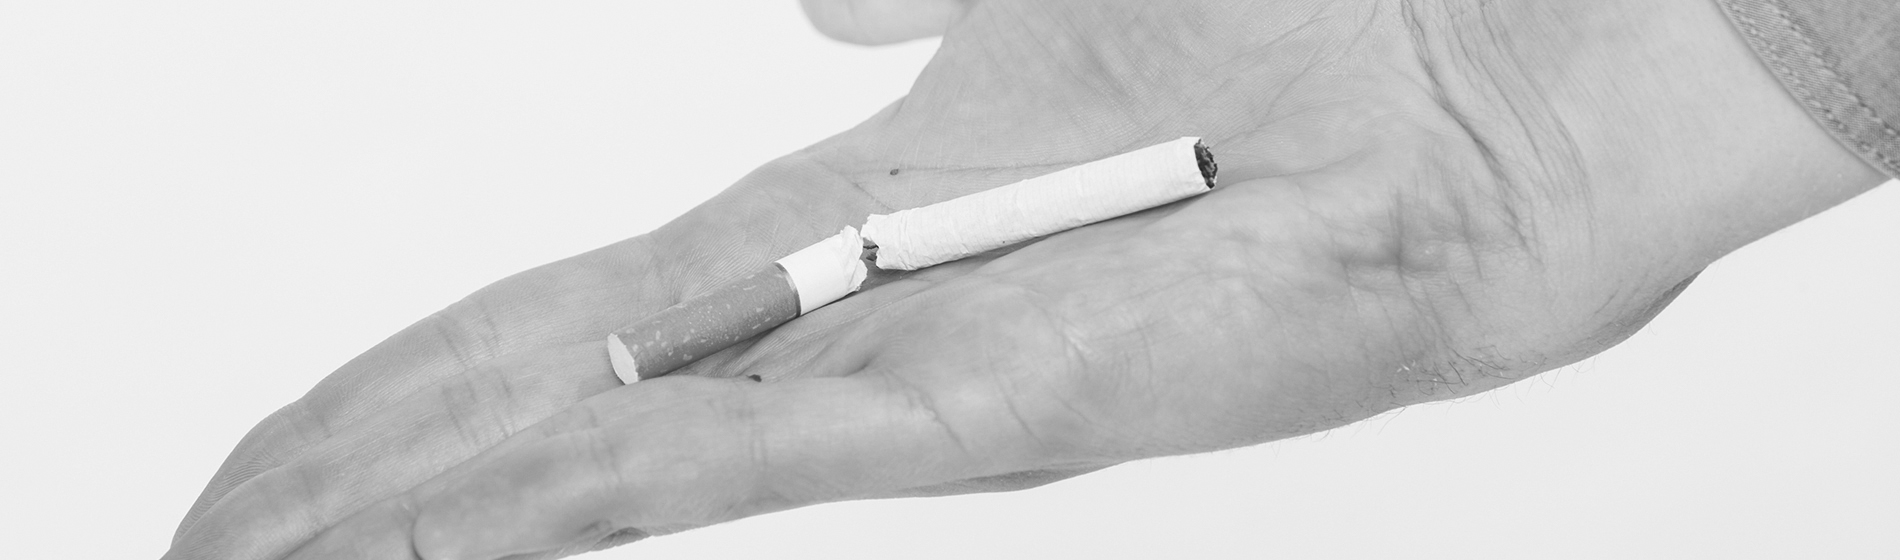 Comment arreter de fumer sans grossir